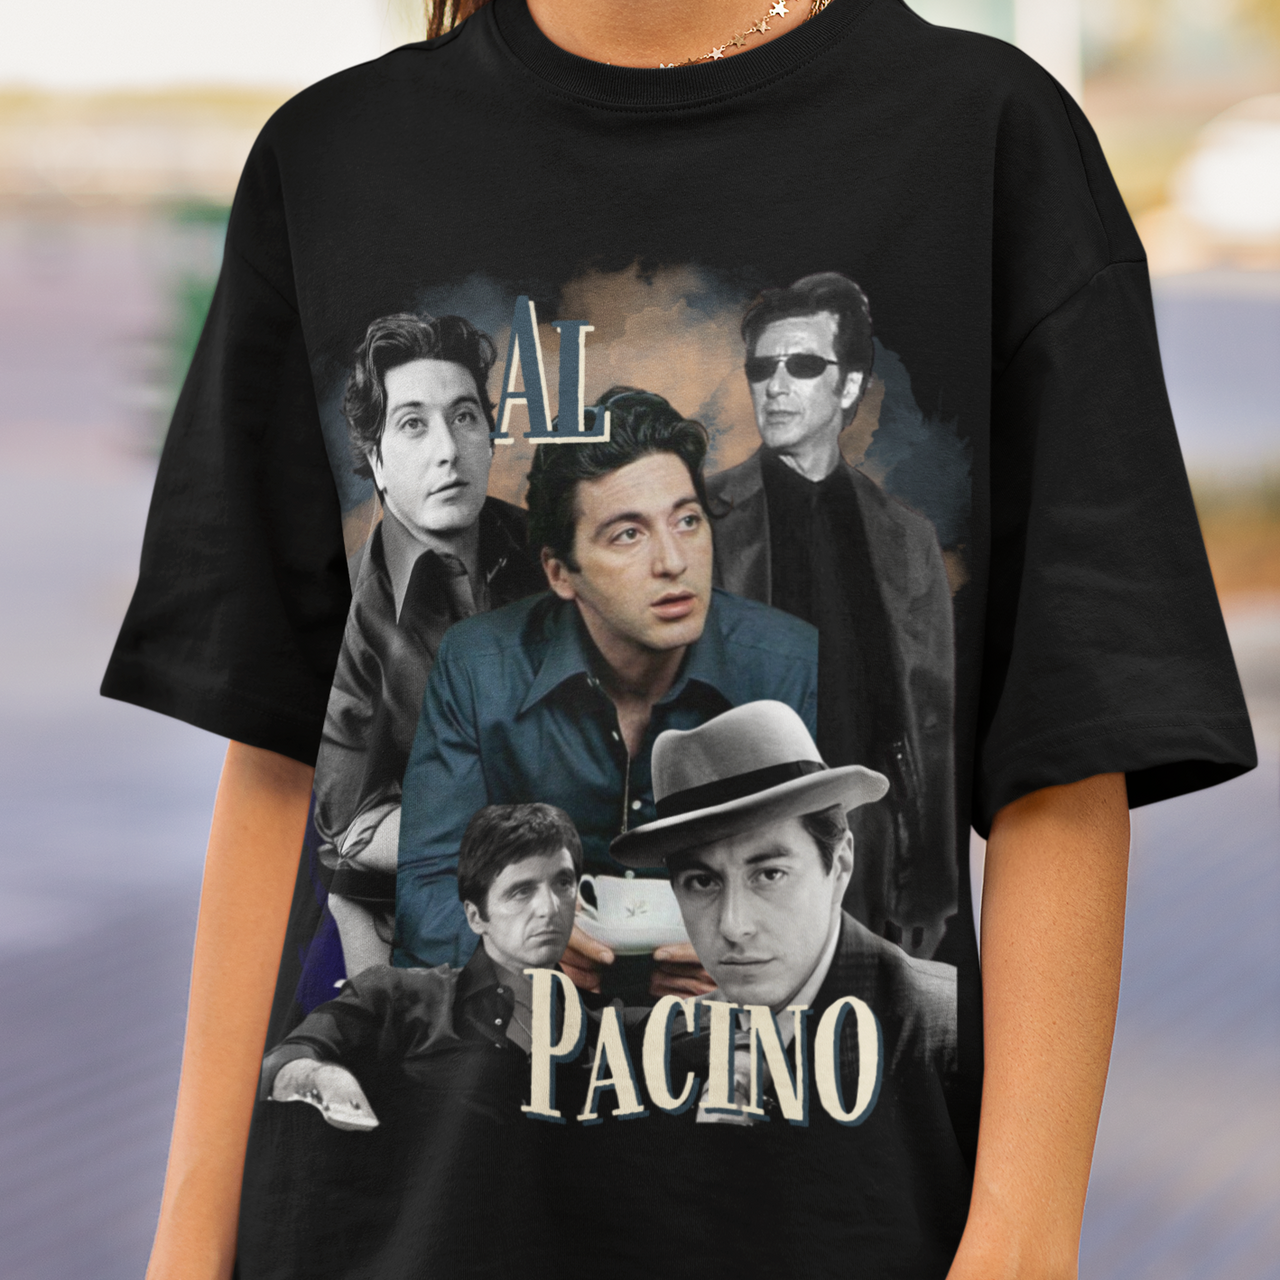 Al Pacino Shirt, Bootleg Shirt Vintage Style TV Show The Heat Fan Gift TShirt, Scarface Fan Tee